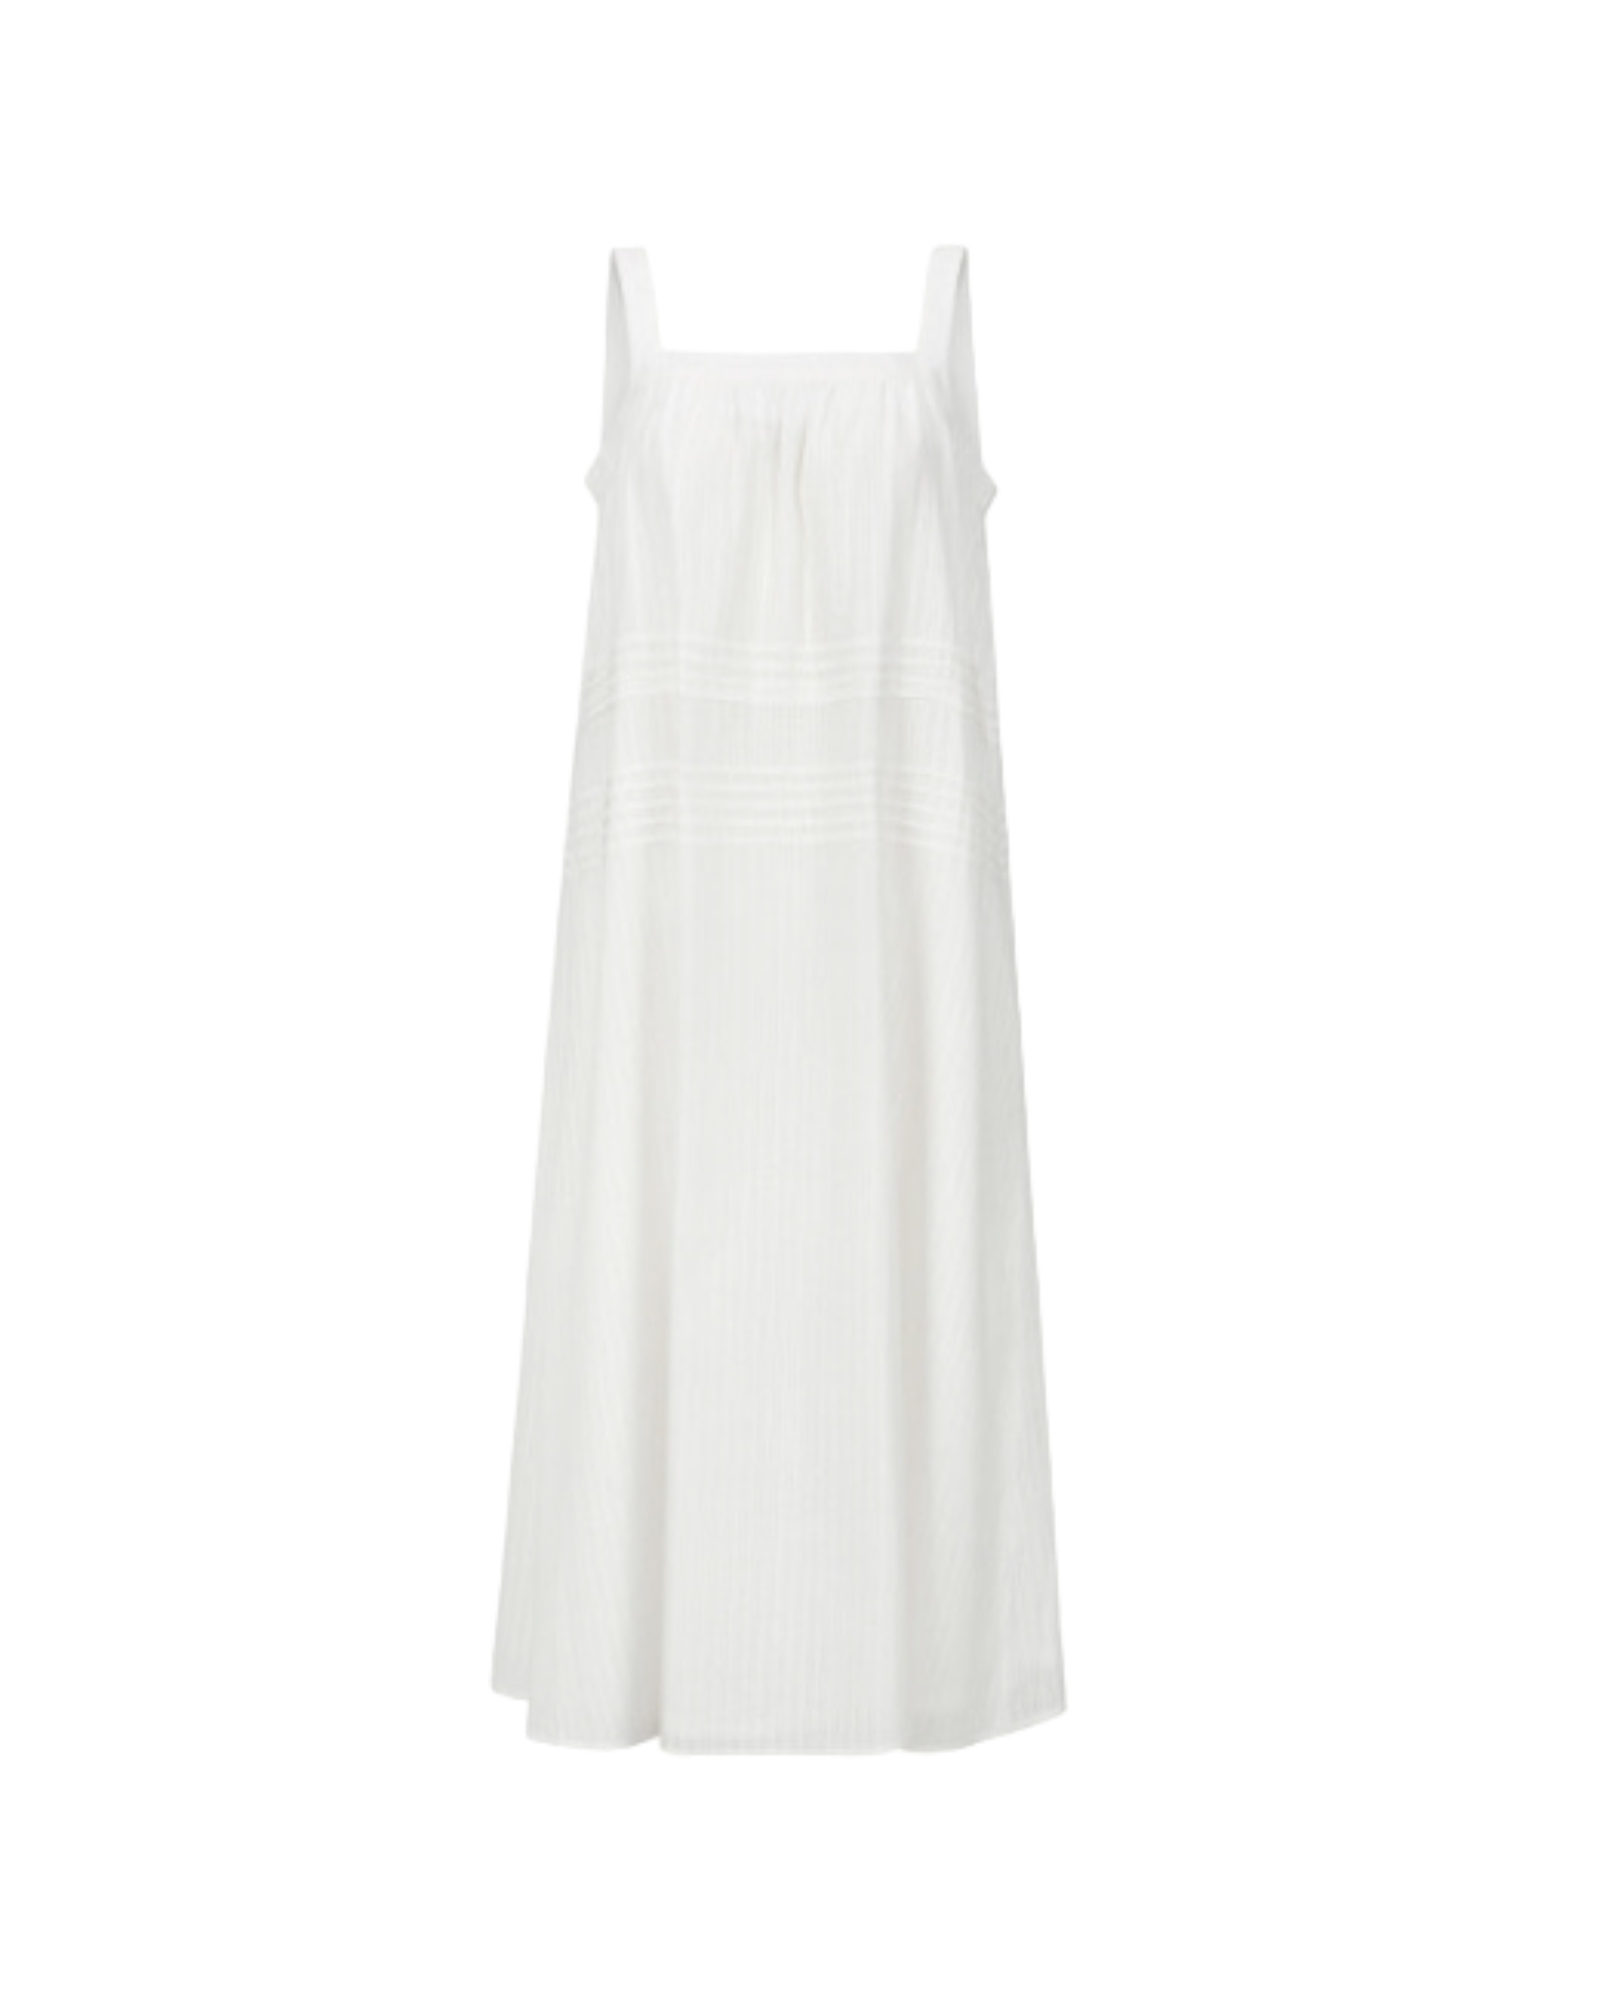 Pintuck Sleeveless Dress In Ivory